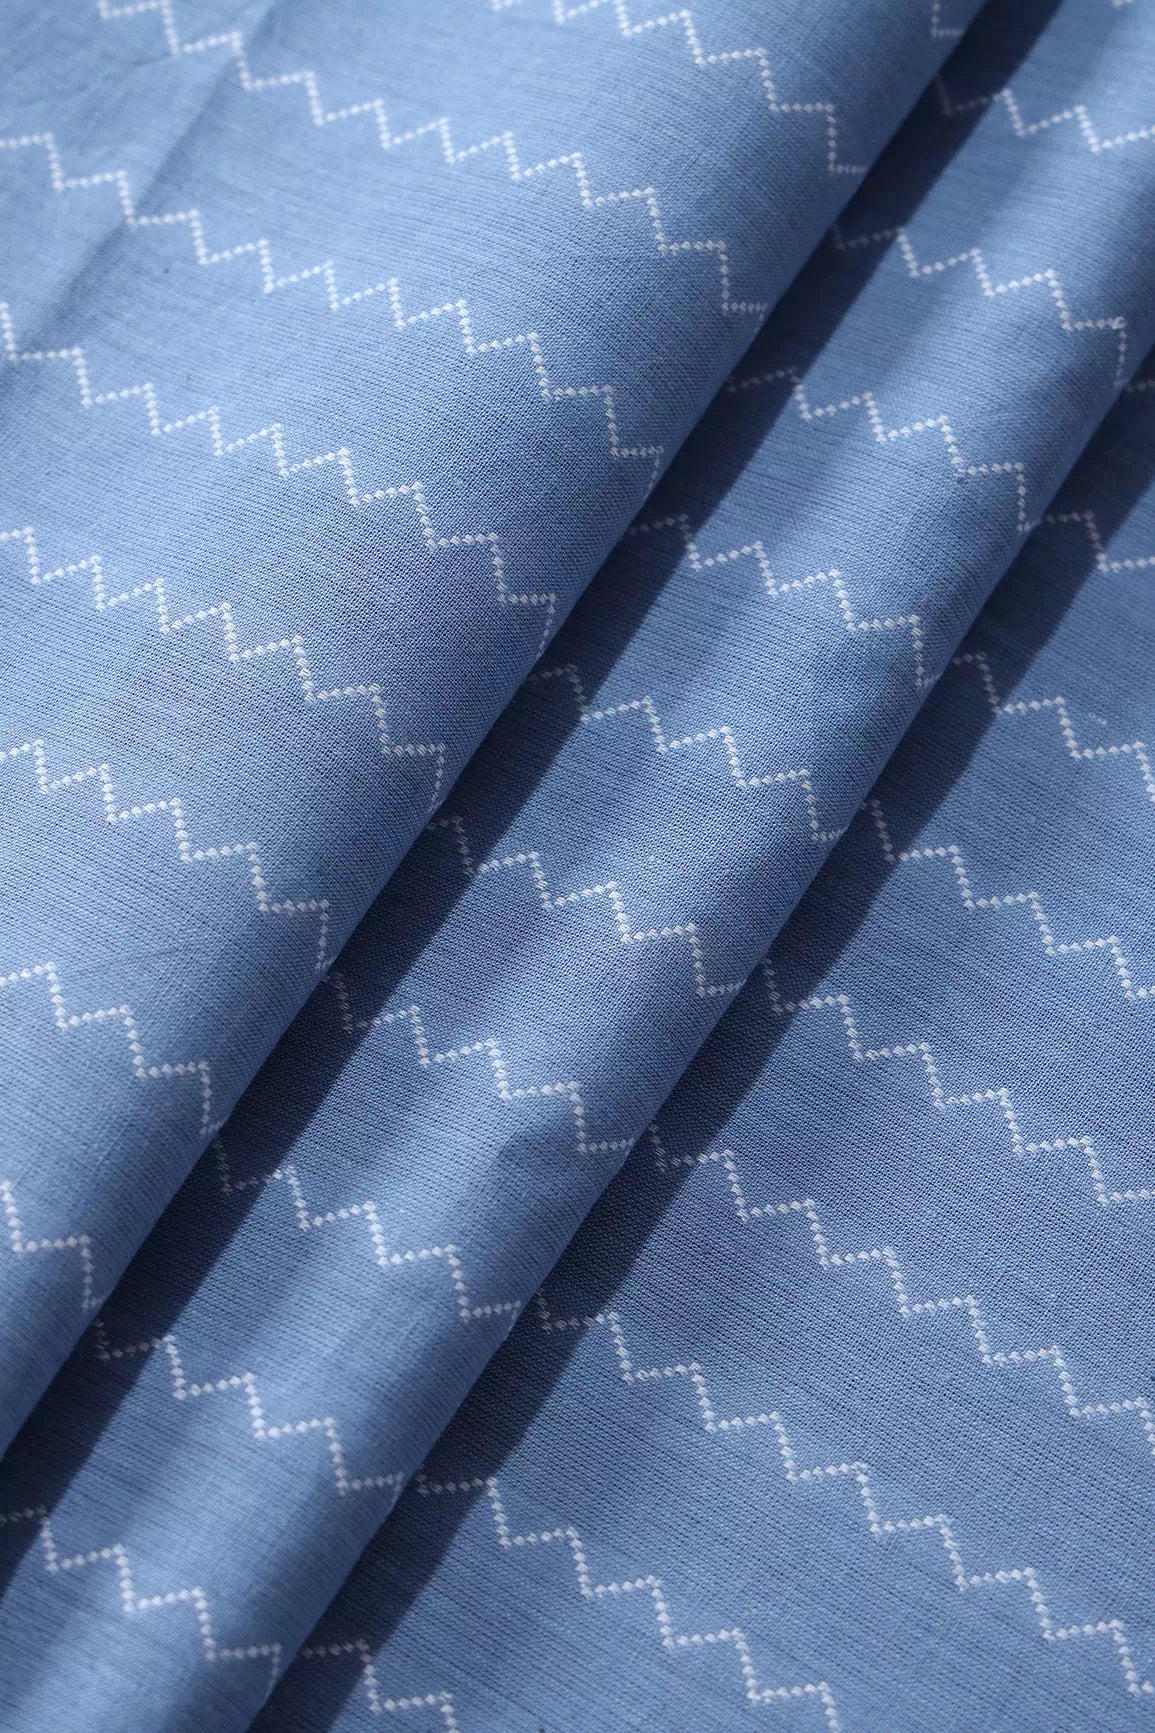 Pastel Blue And White Chevron Pattern On Handwoven Organic Cotton Fabric